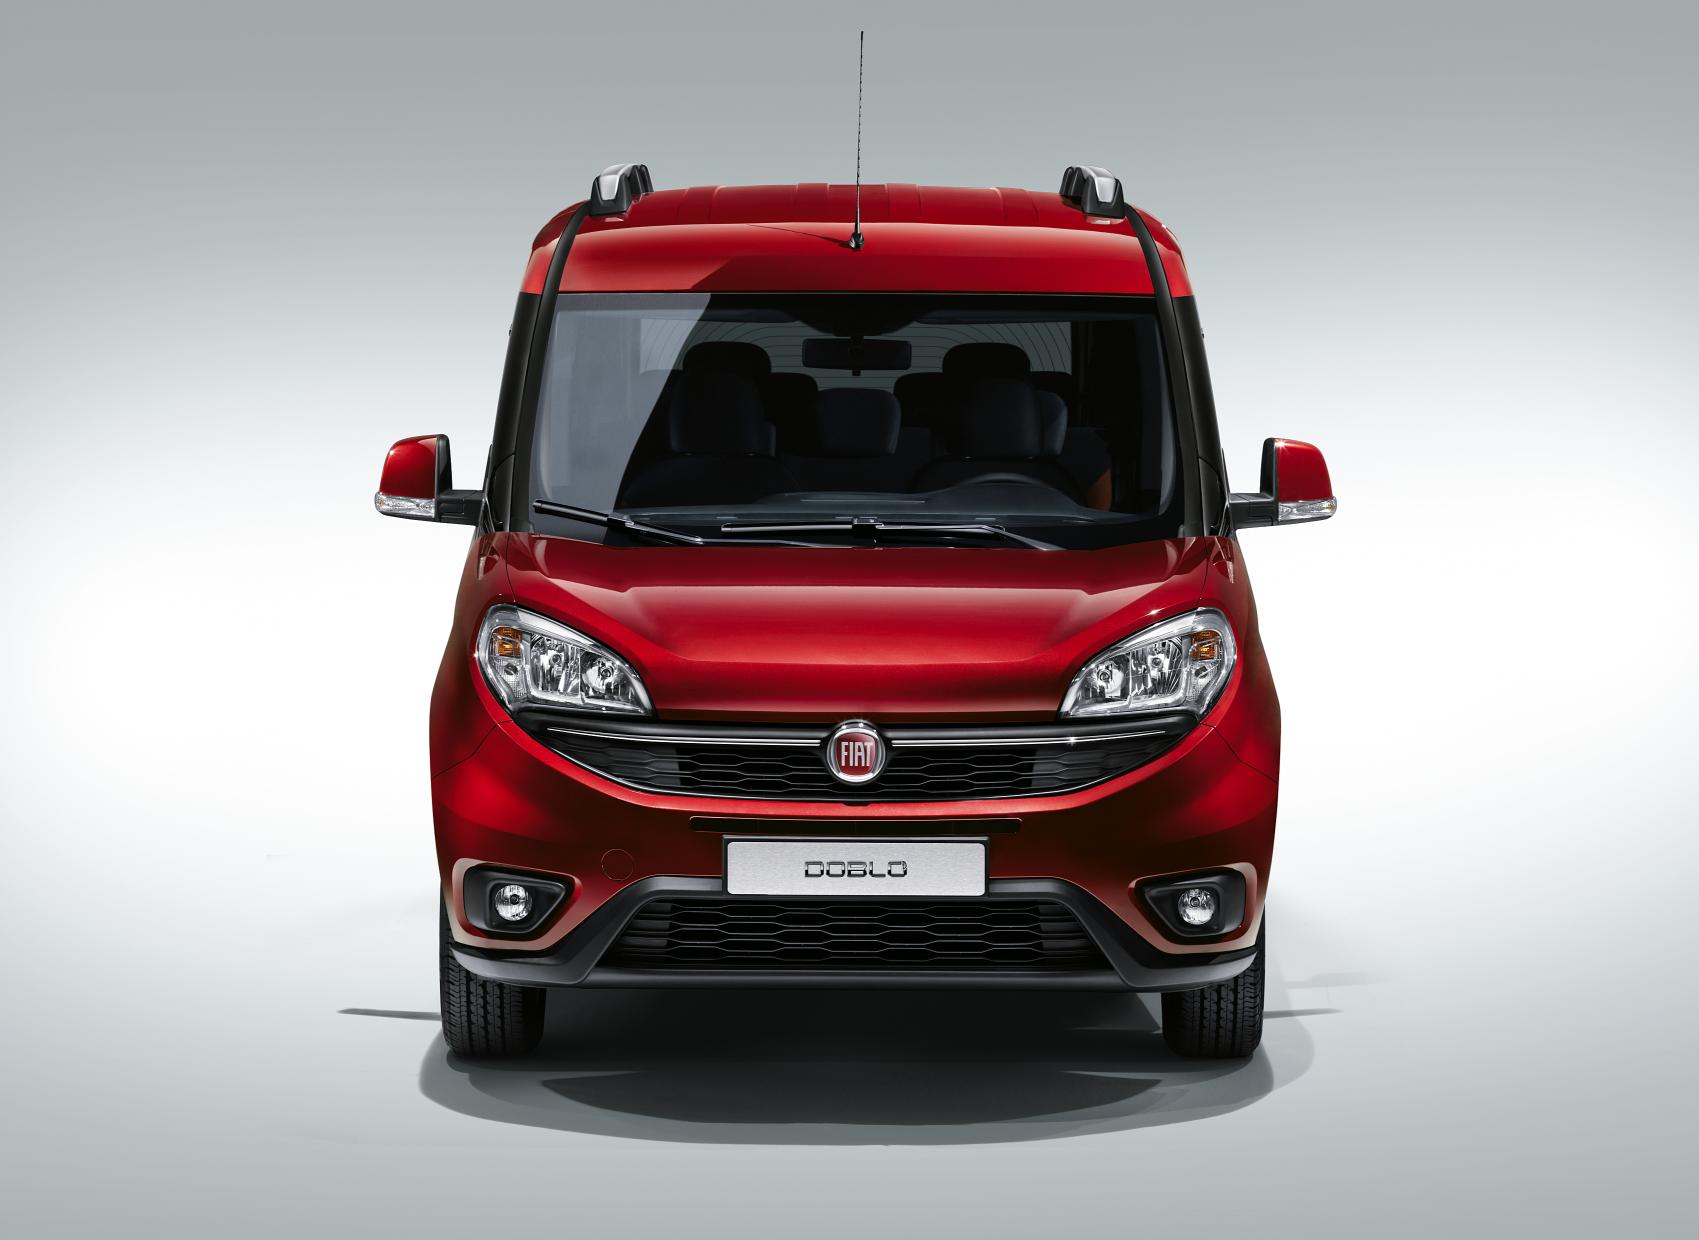 2015 Fiat Doblo Pricing Starts at £13,480 - autoevolution